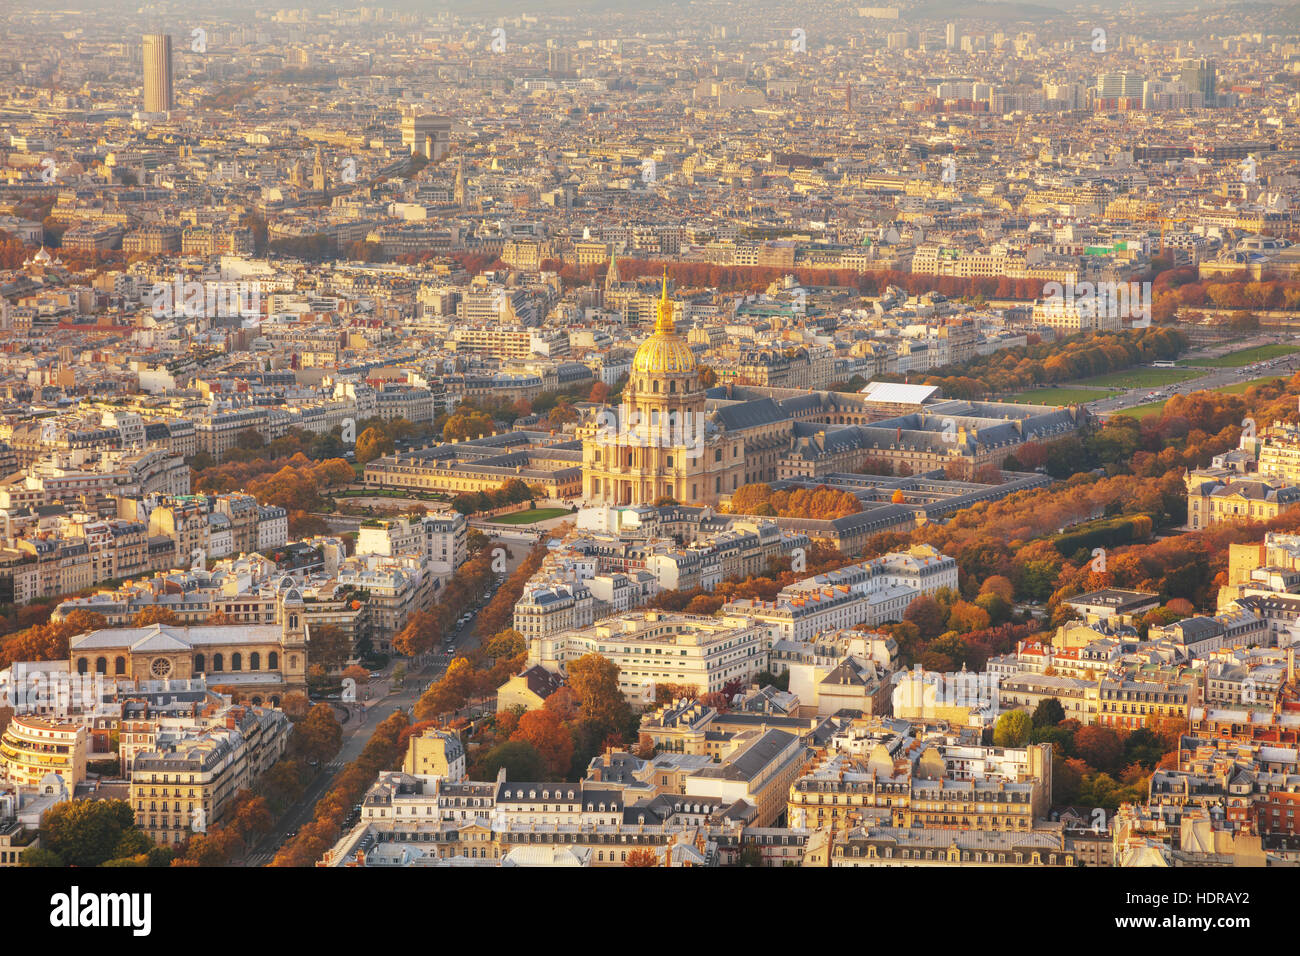 Das Armee-Museum in Paris, Frankreich-Luftbild Stockfoto